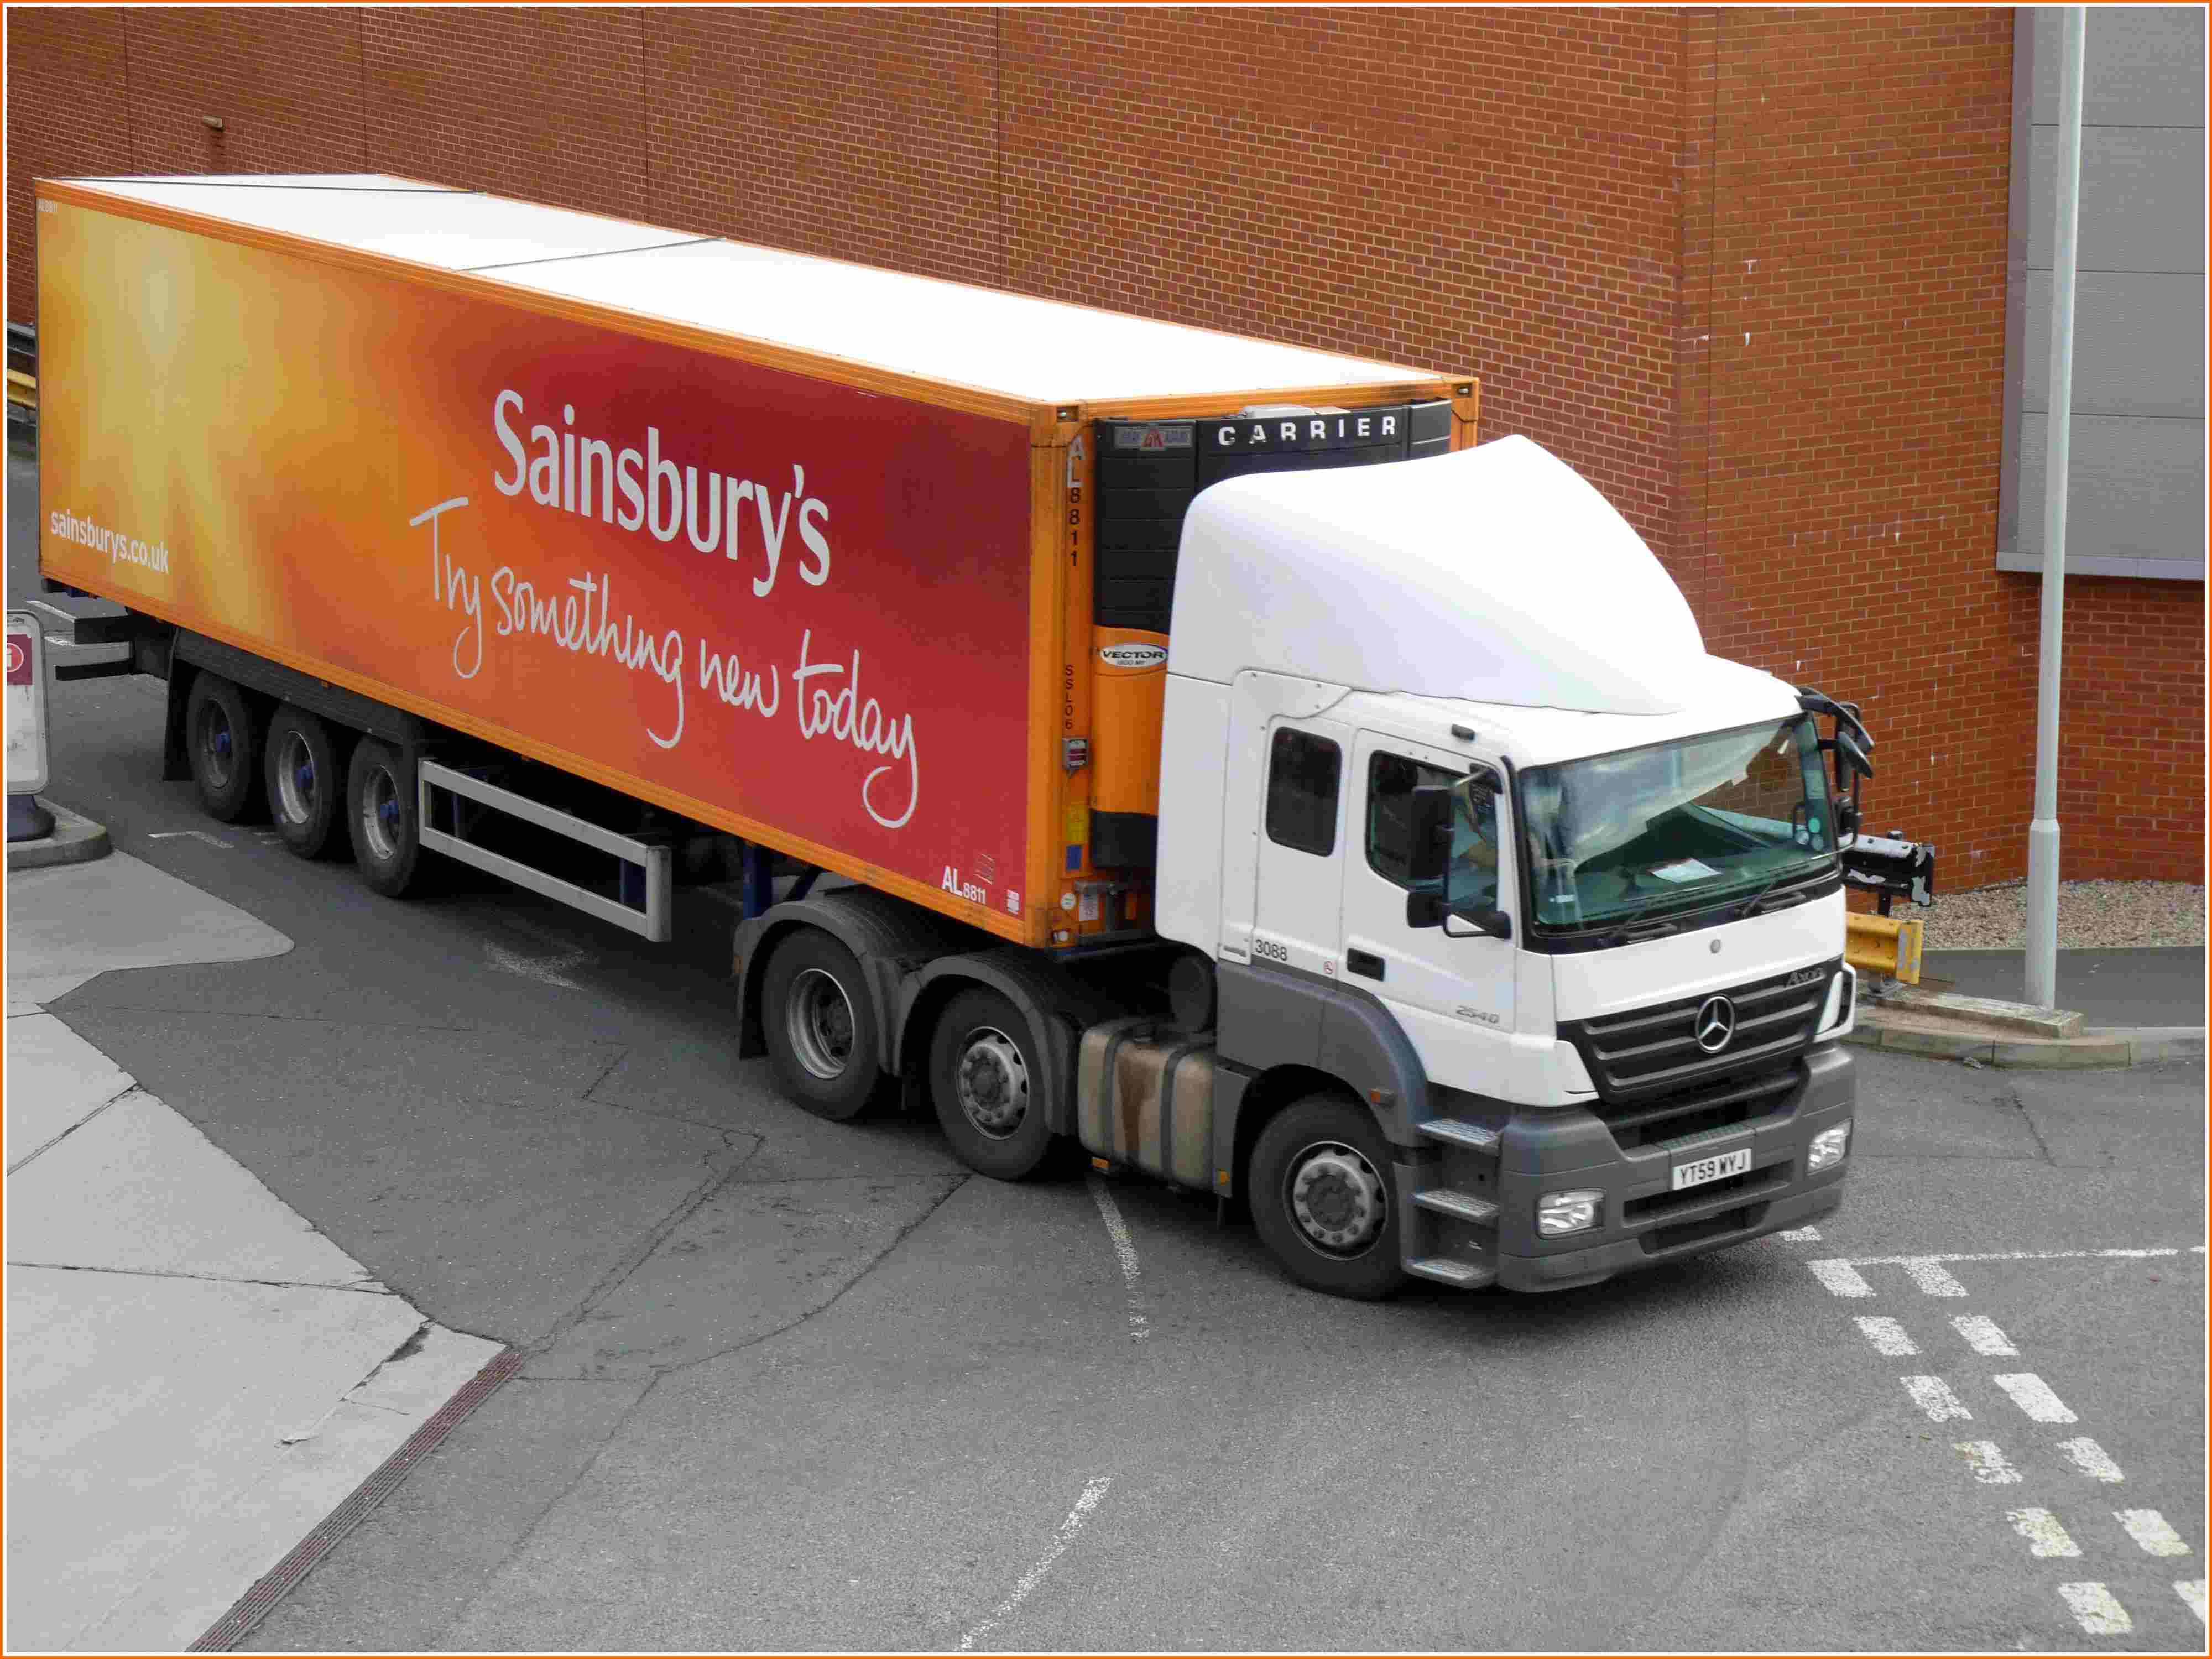 Images Wikimedia Commons/4 Graham Richardson Sainsburys_lorry_refrigerated_trailer.jpg